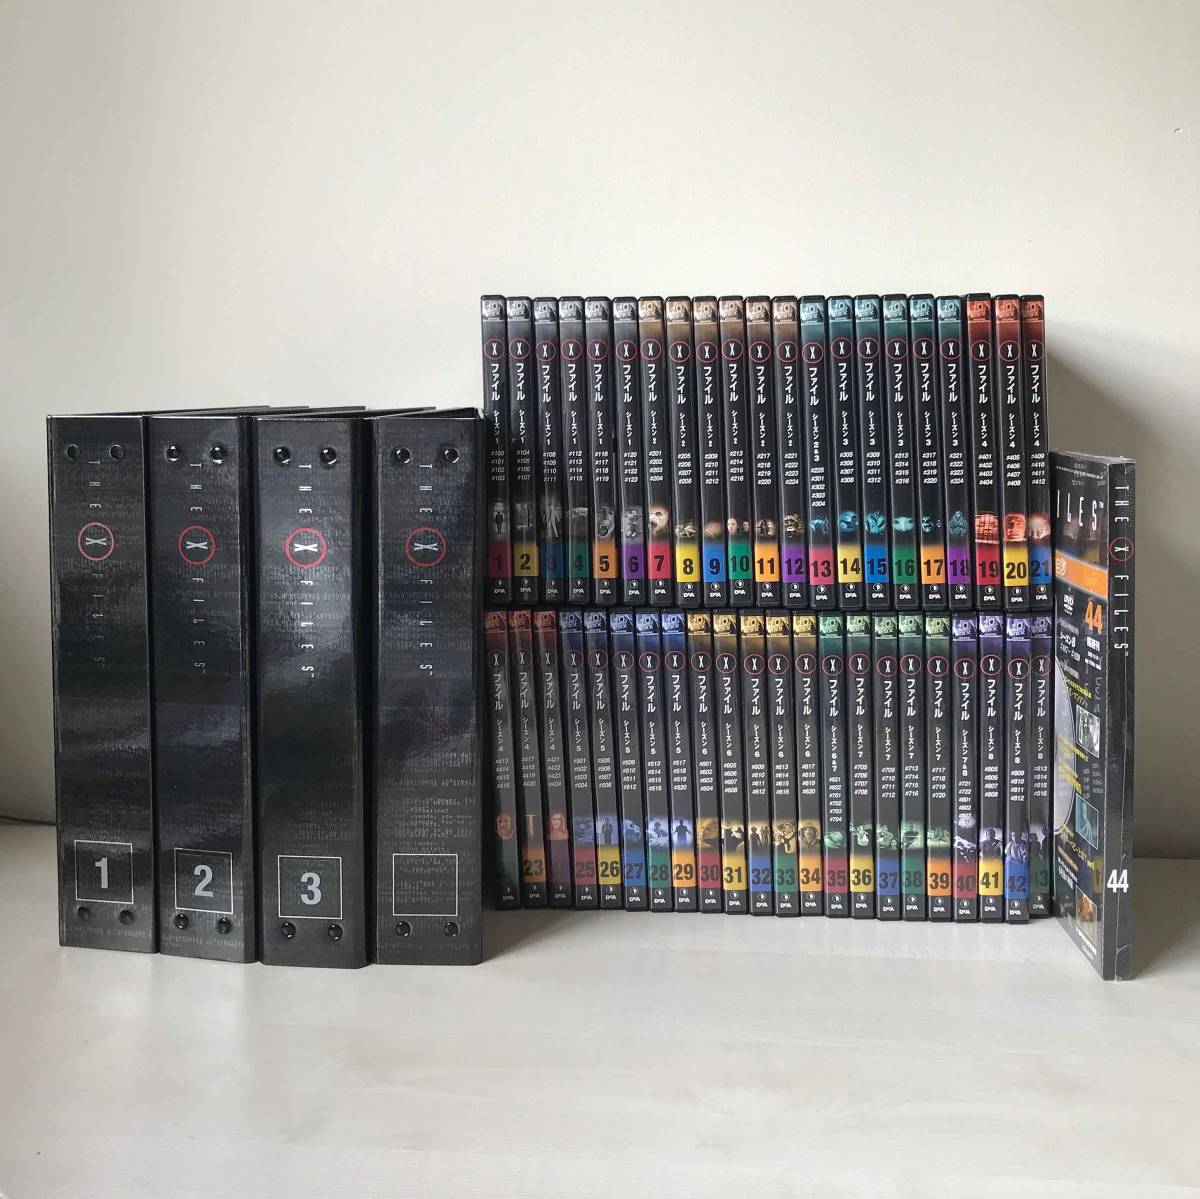 DeAGOSTINI THE X FILES デアゴスティーニ Xファイル DVDコレクション 44巻　冊子44冊付属 バインダー付き